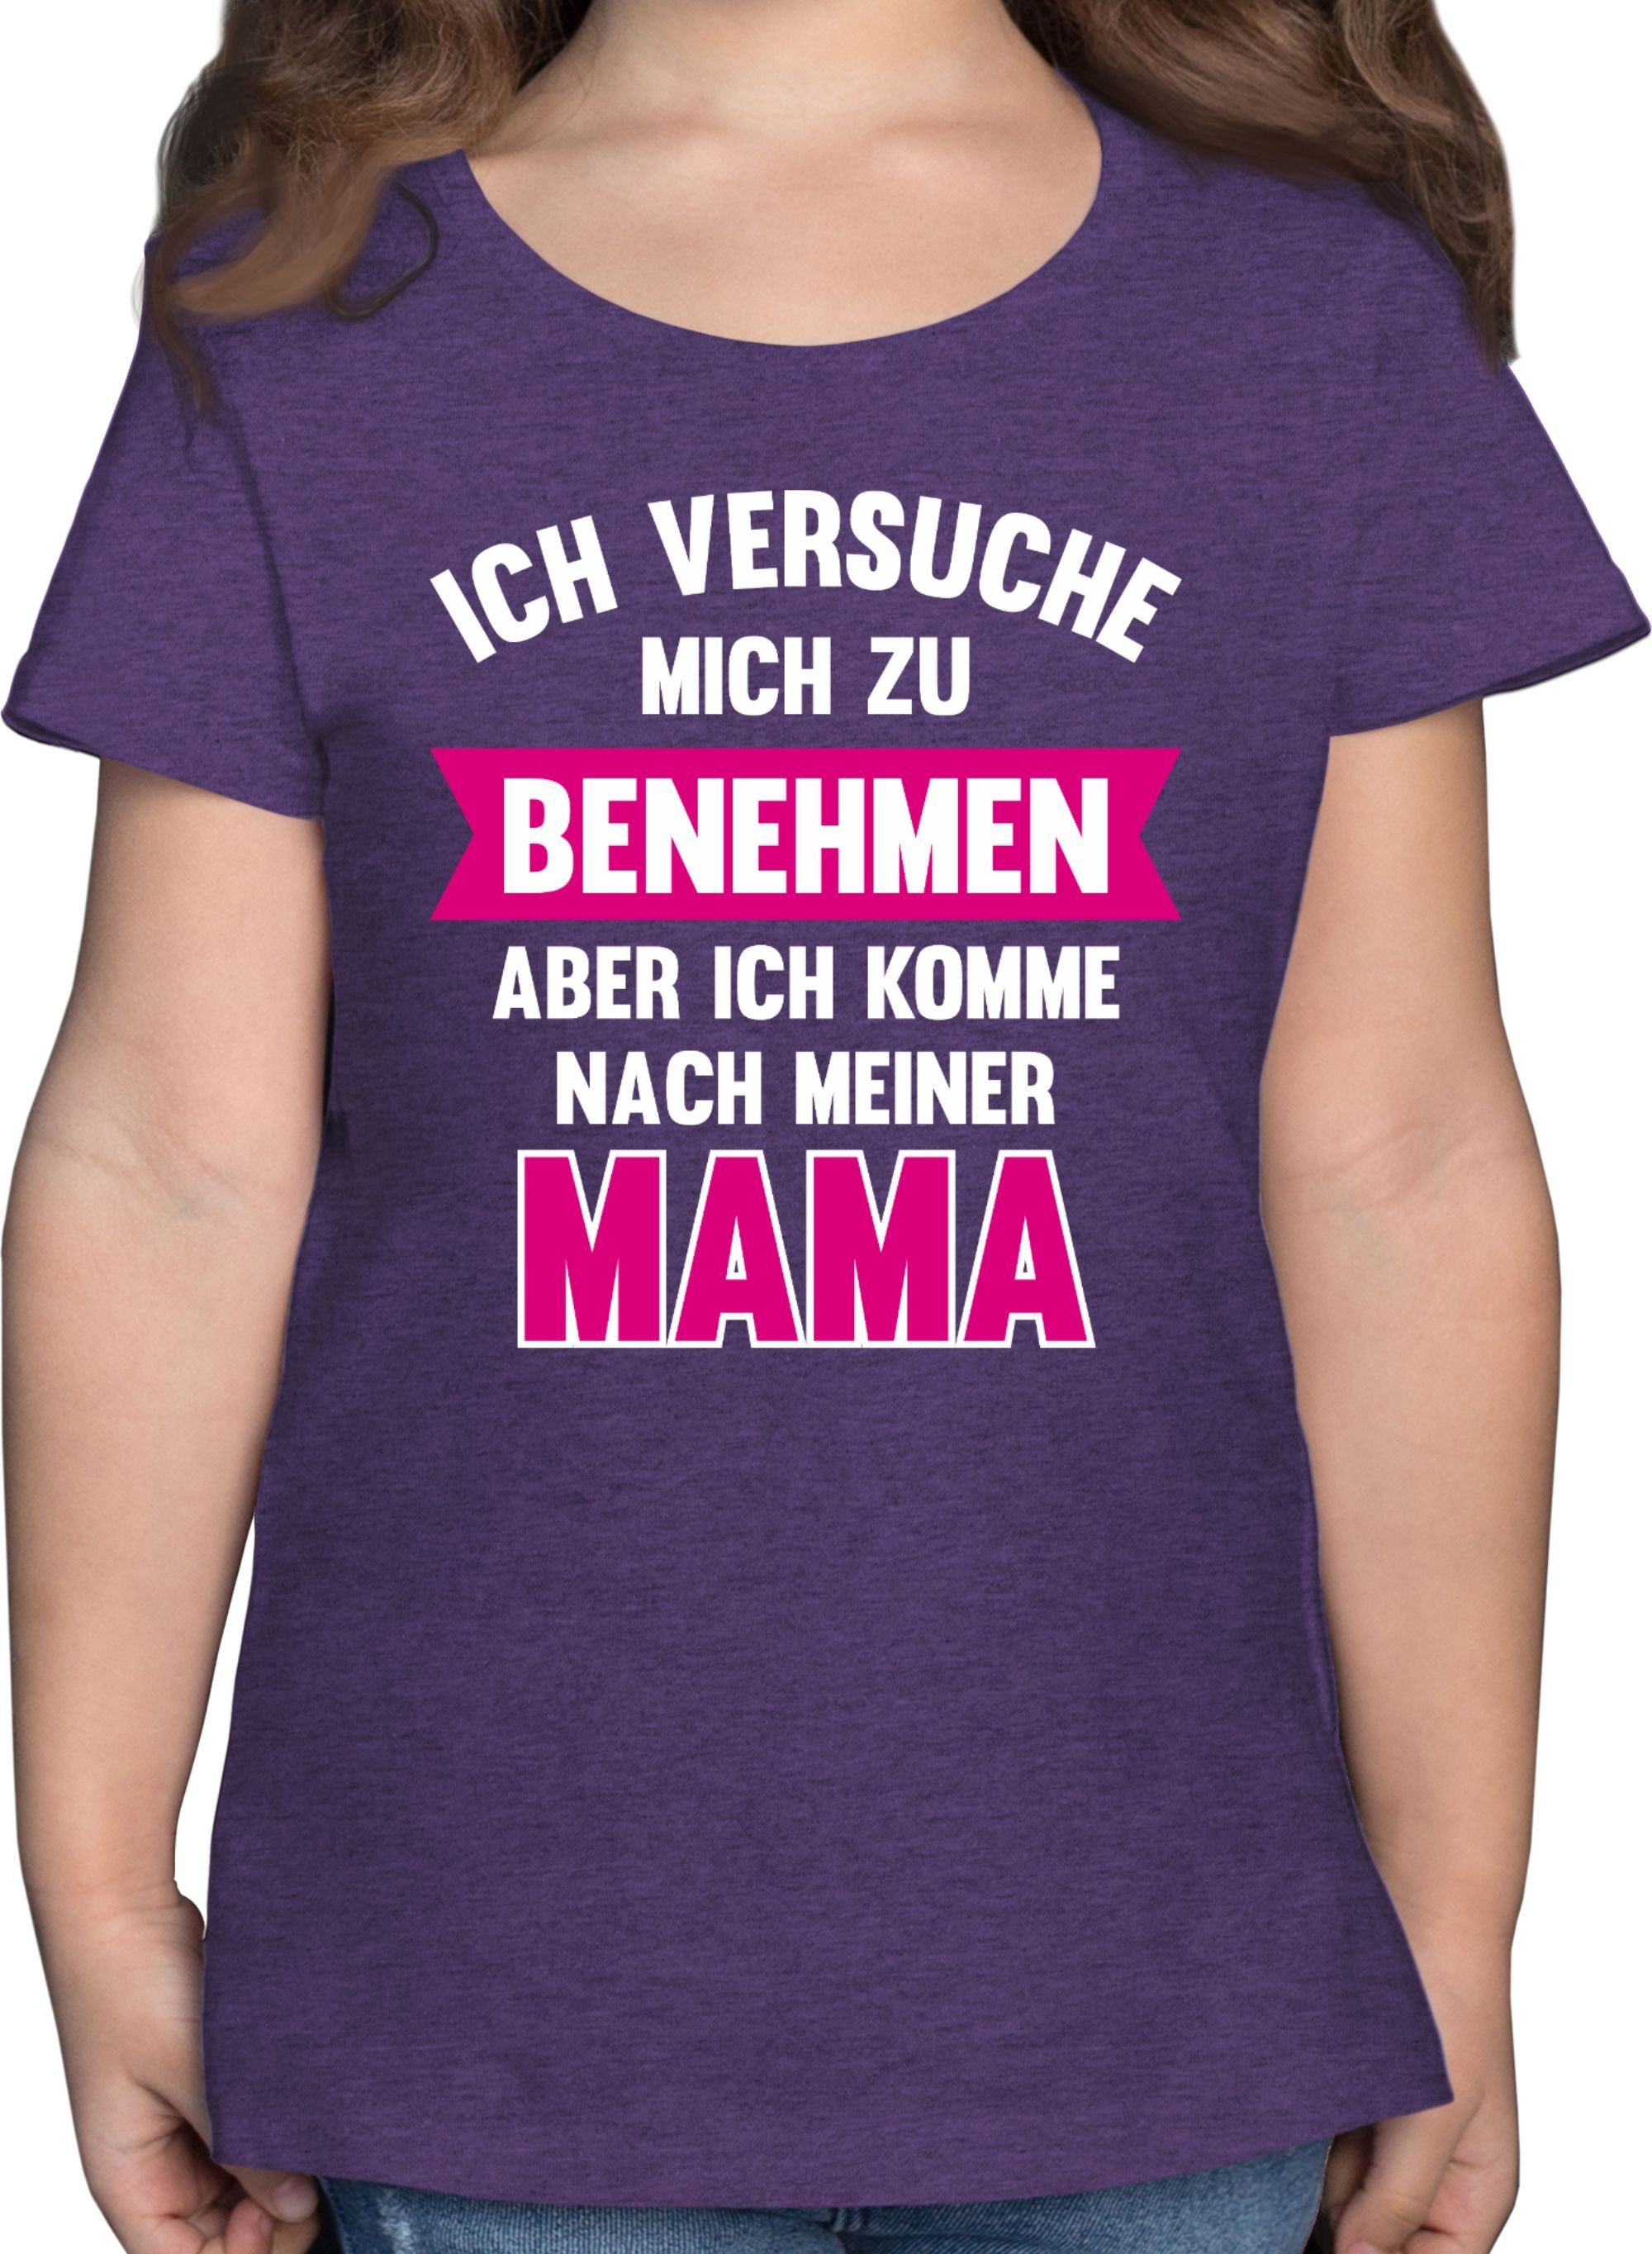 42+ Mama t shirt sprueche ideas